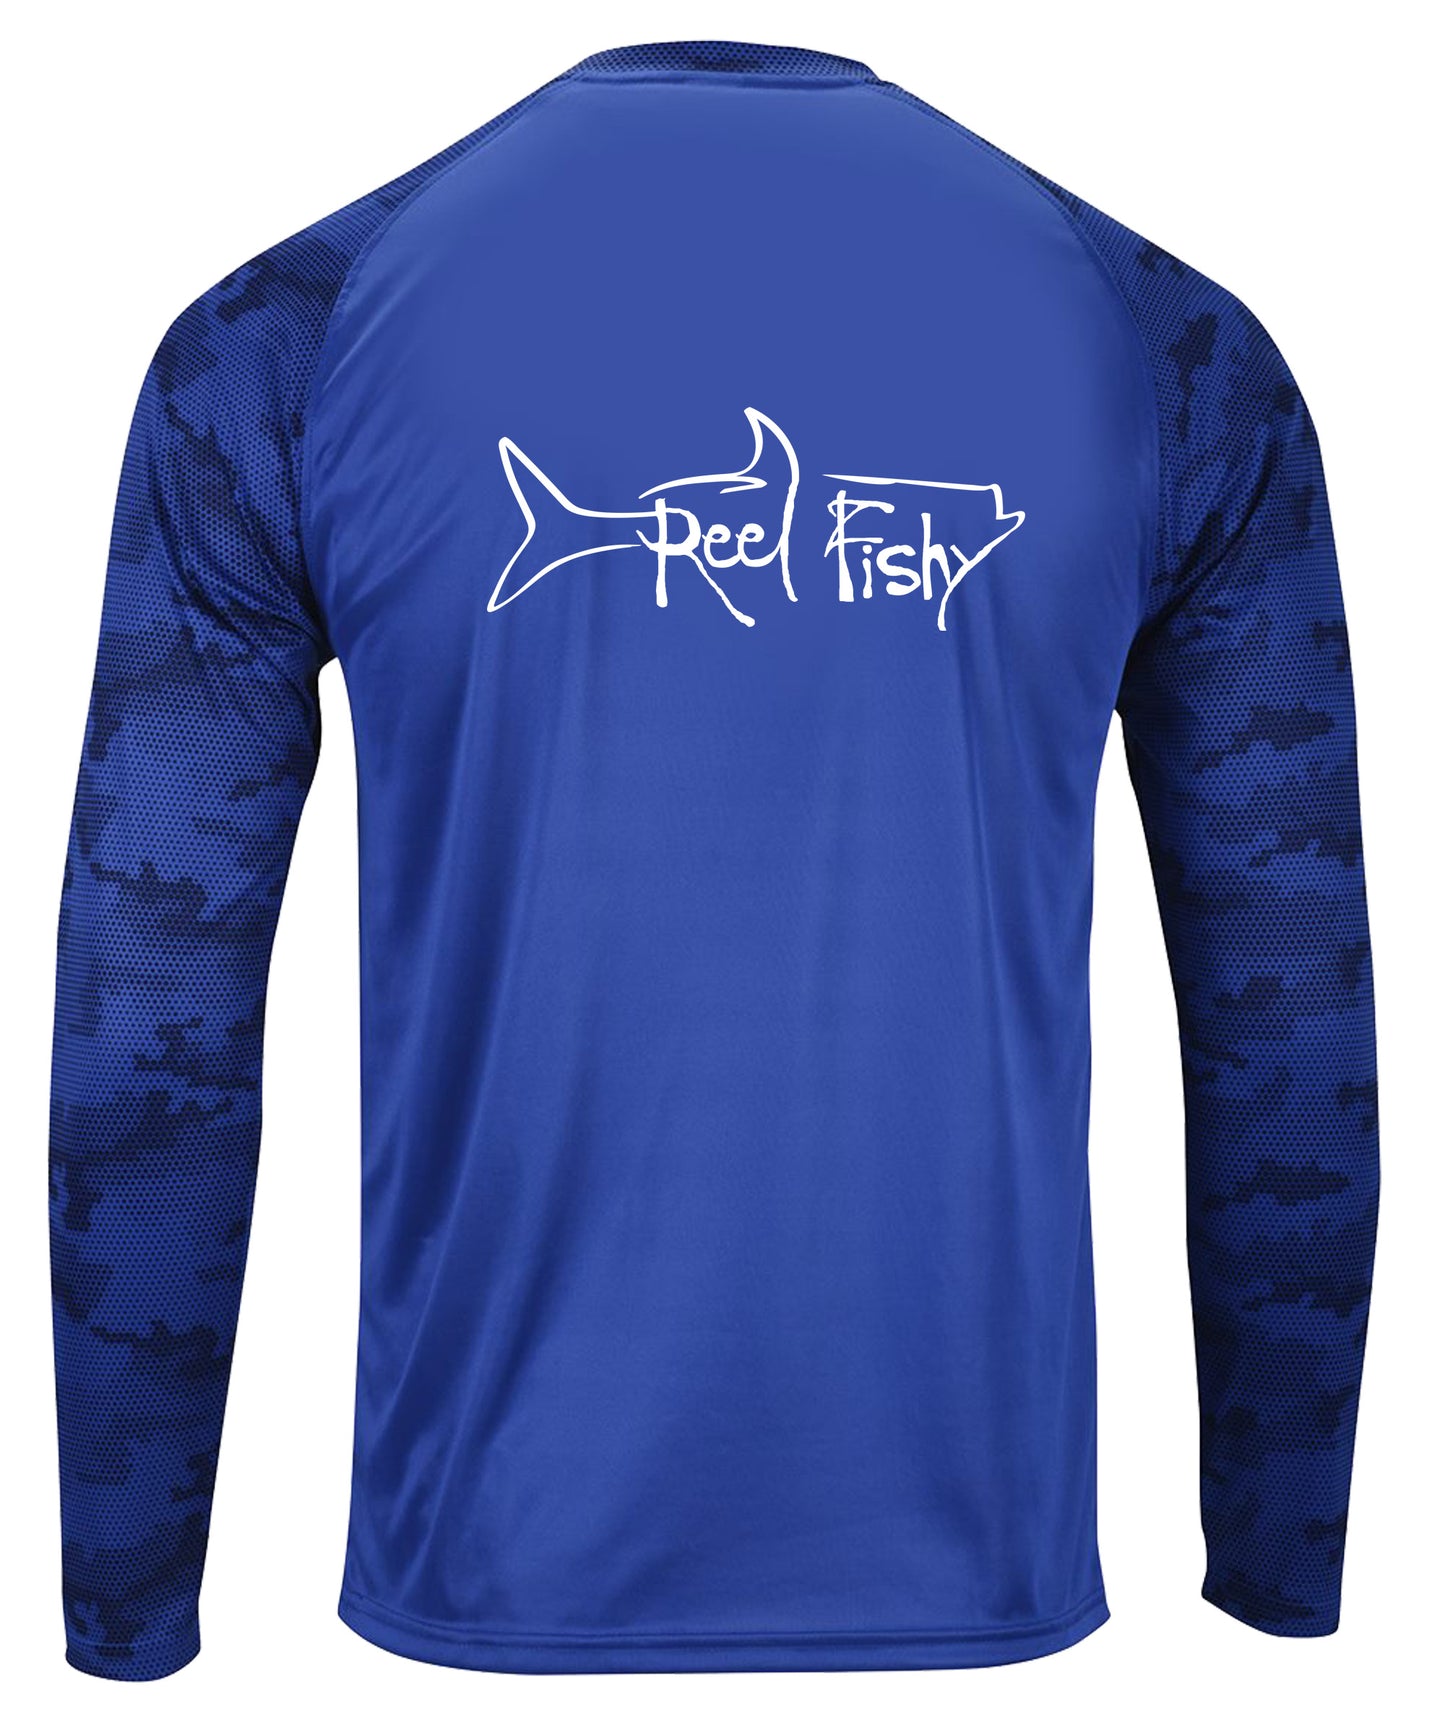 Tarpon Digital Camo Performance Dry-Fit Fishing Long Sleeve Shirts with 50+ UPF Sun Protection - Royal